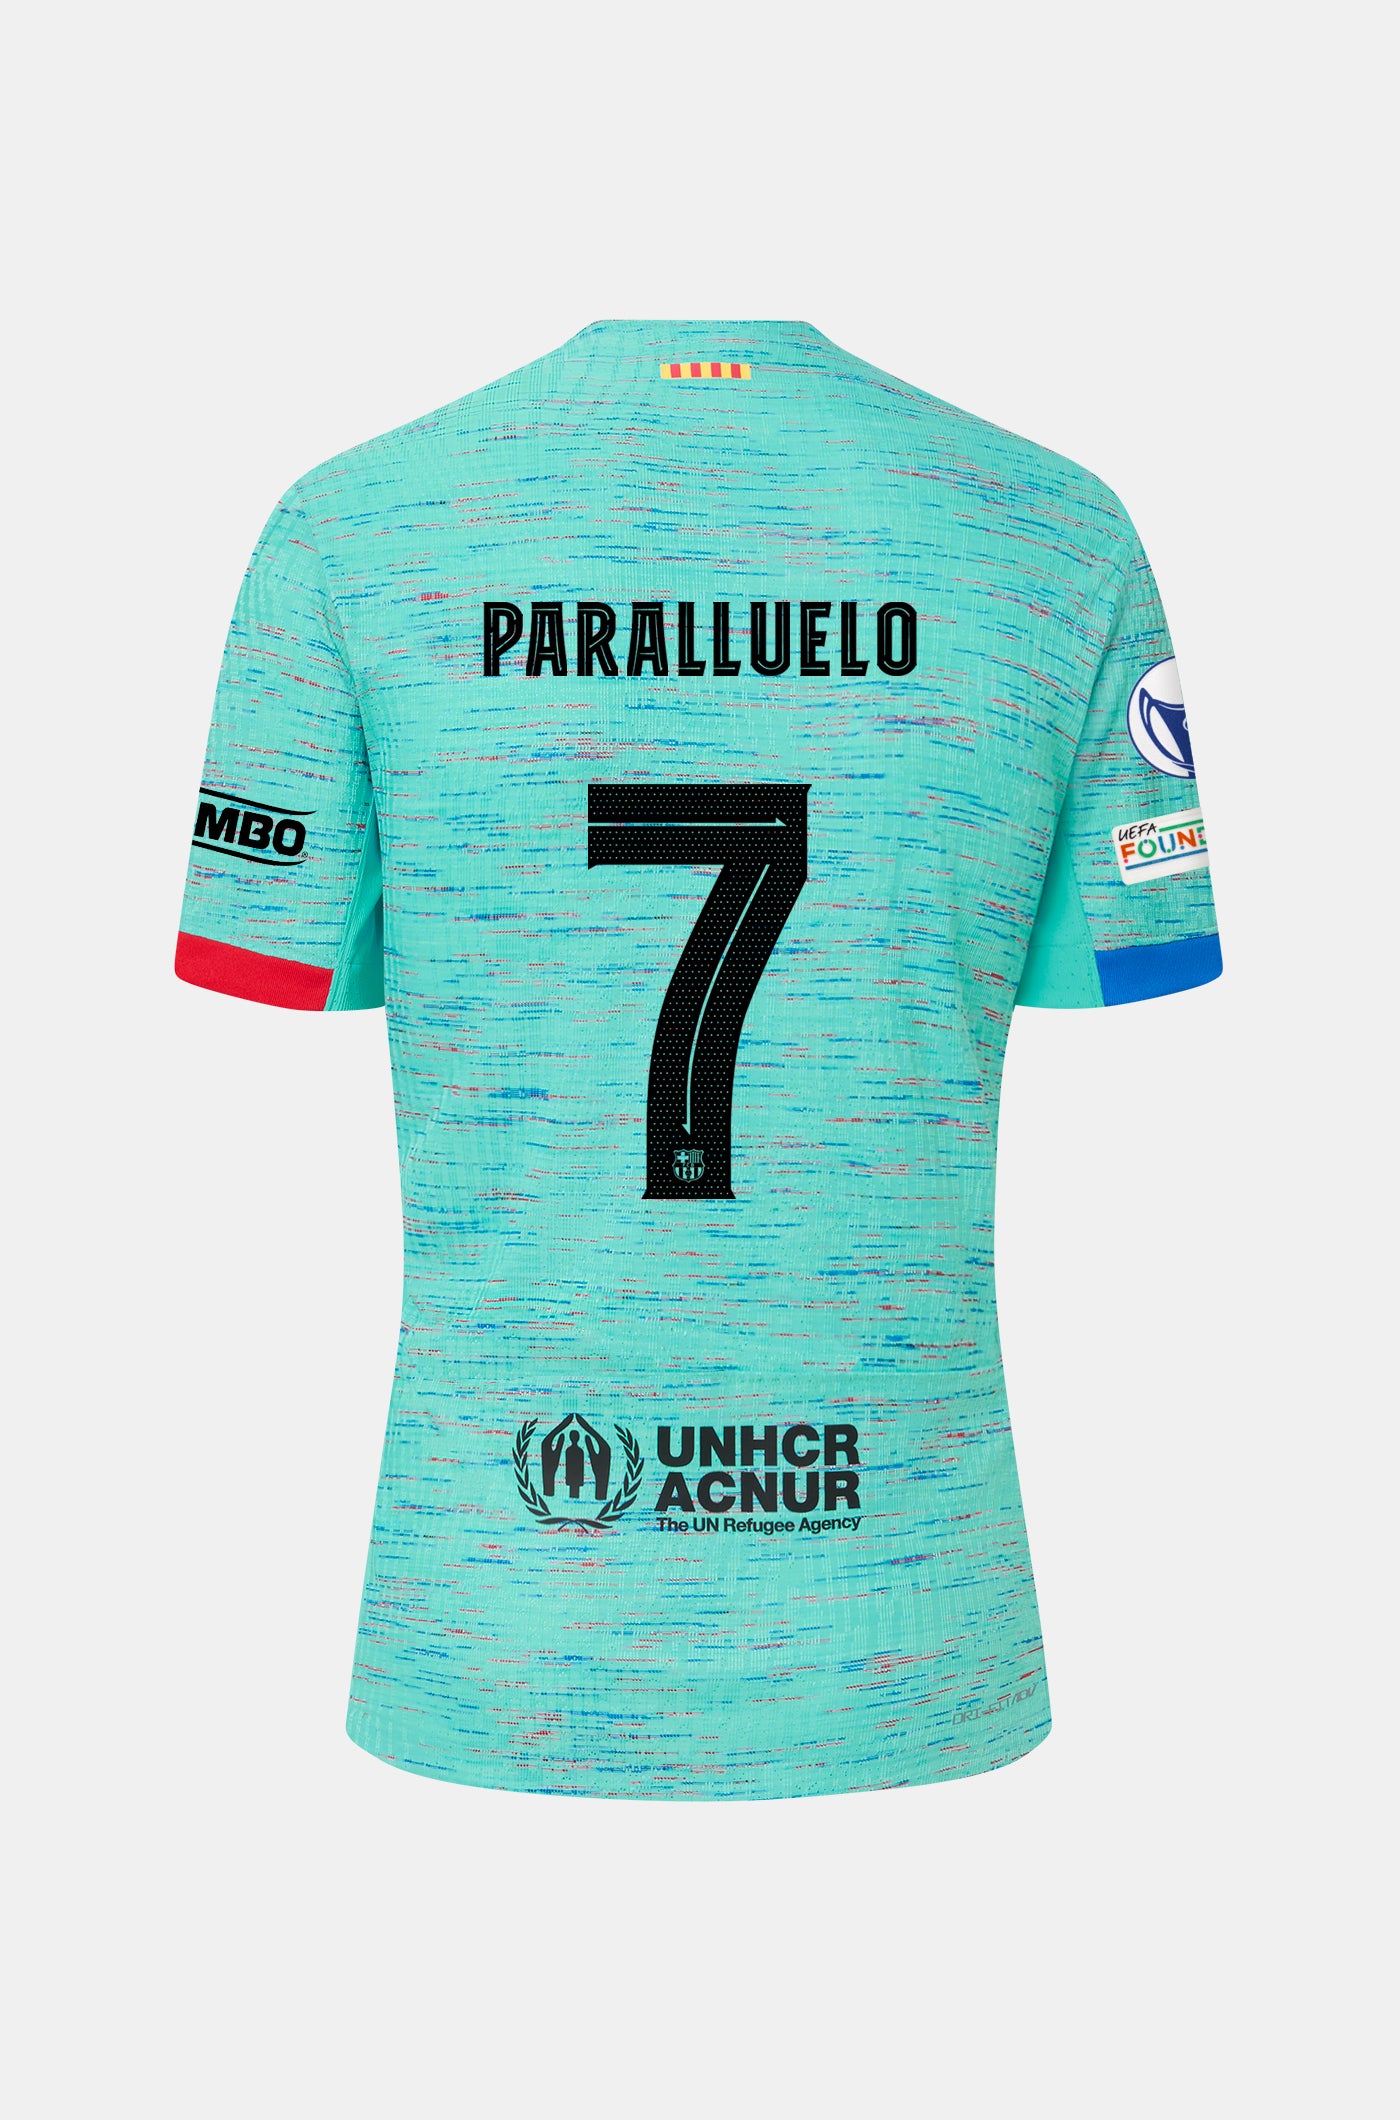 UWCL FC Barcelona third shirt 23/24 - Women  - PARALLUELO